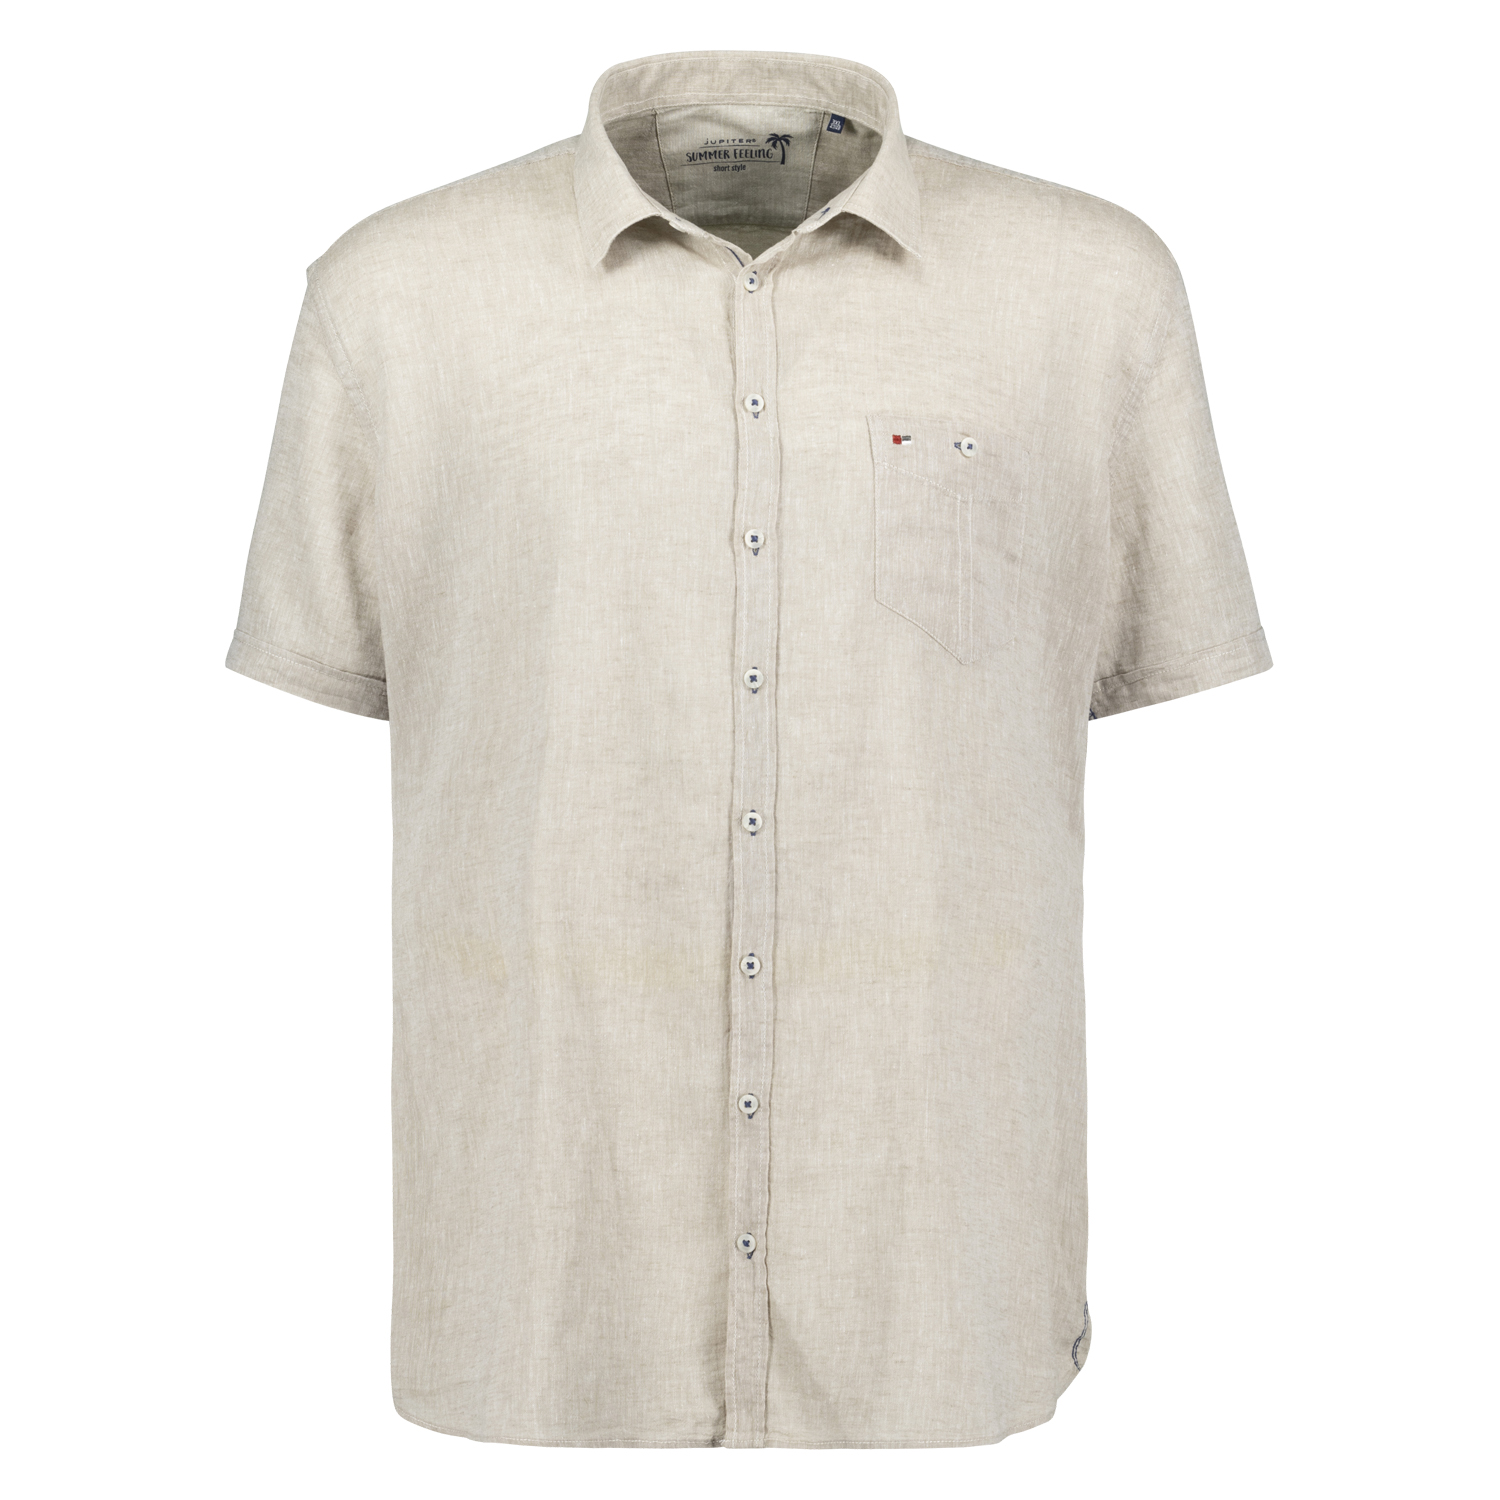 Mens Short Sleeve Summer Shirt in white by Jupiter in Oversizes 3XL-7XL